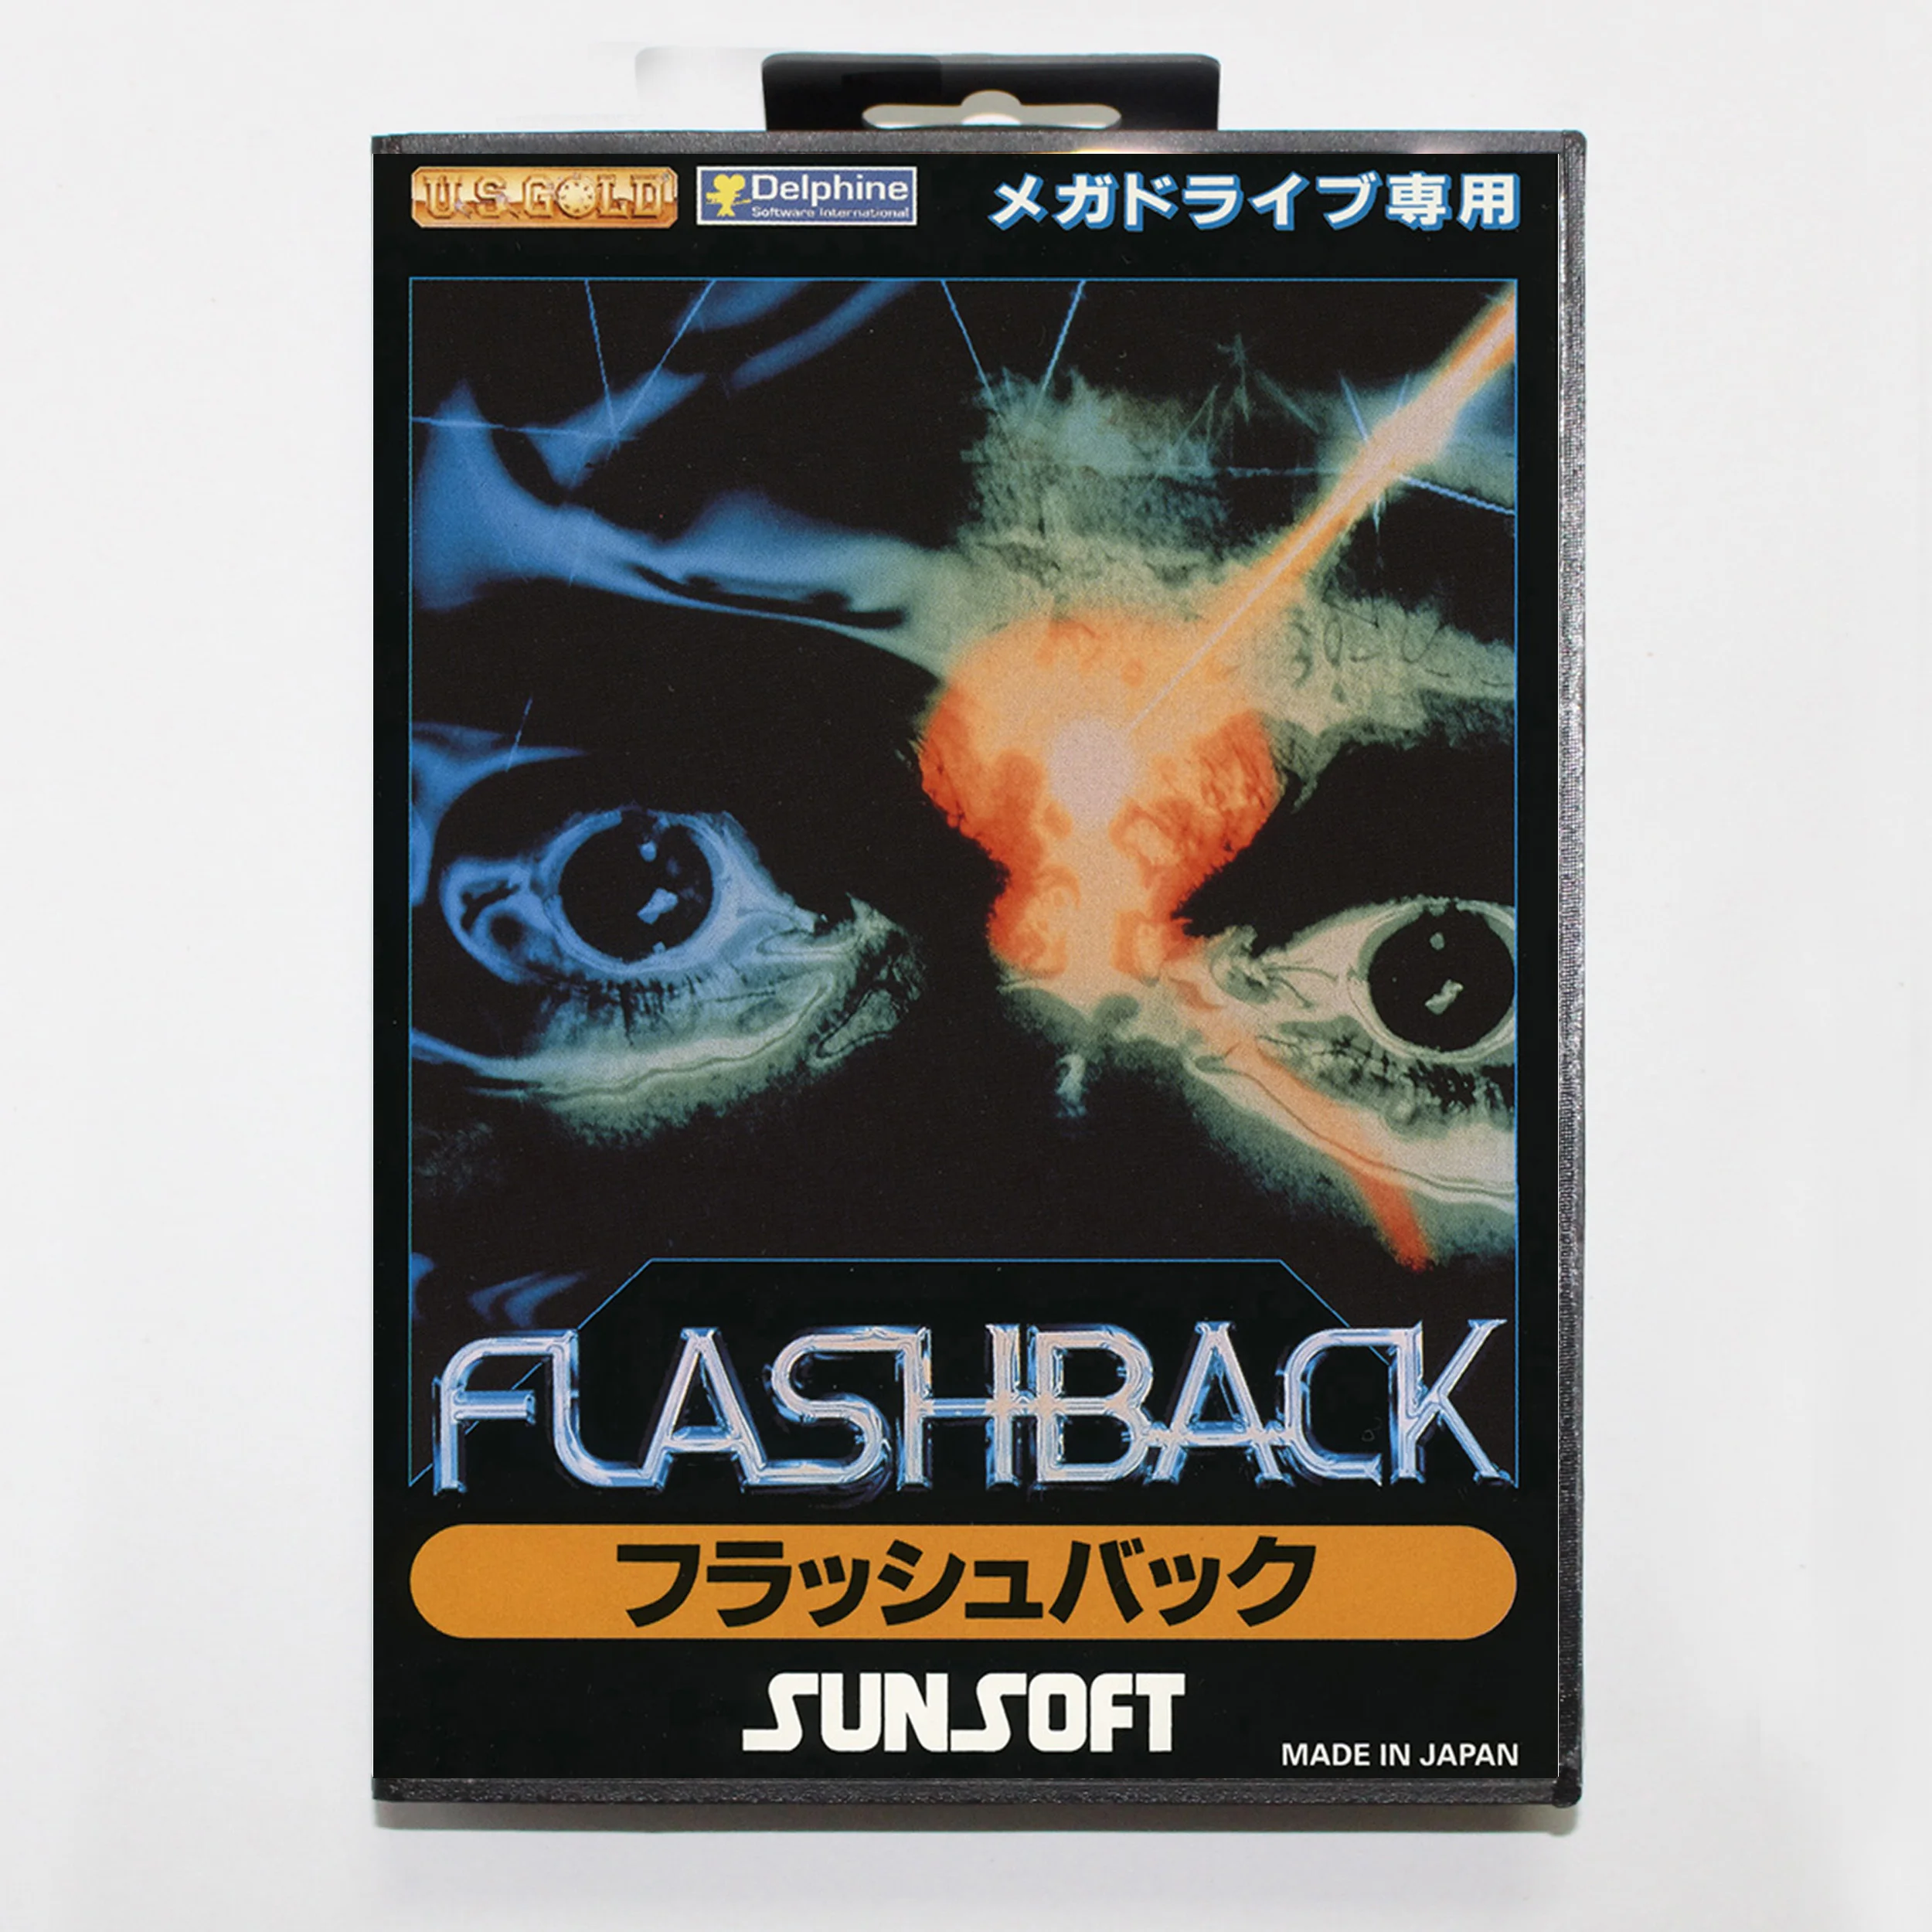 

Игровая карта Flashback 16 бит MD для Sega Mega Drive/ Genesis с чехлом JP, Розничная коробка